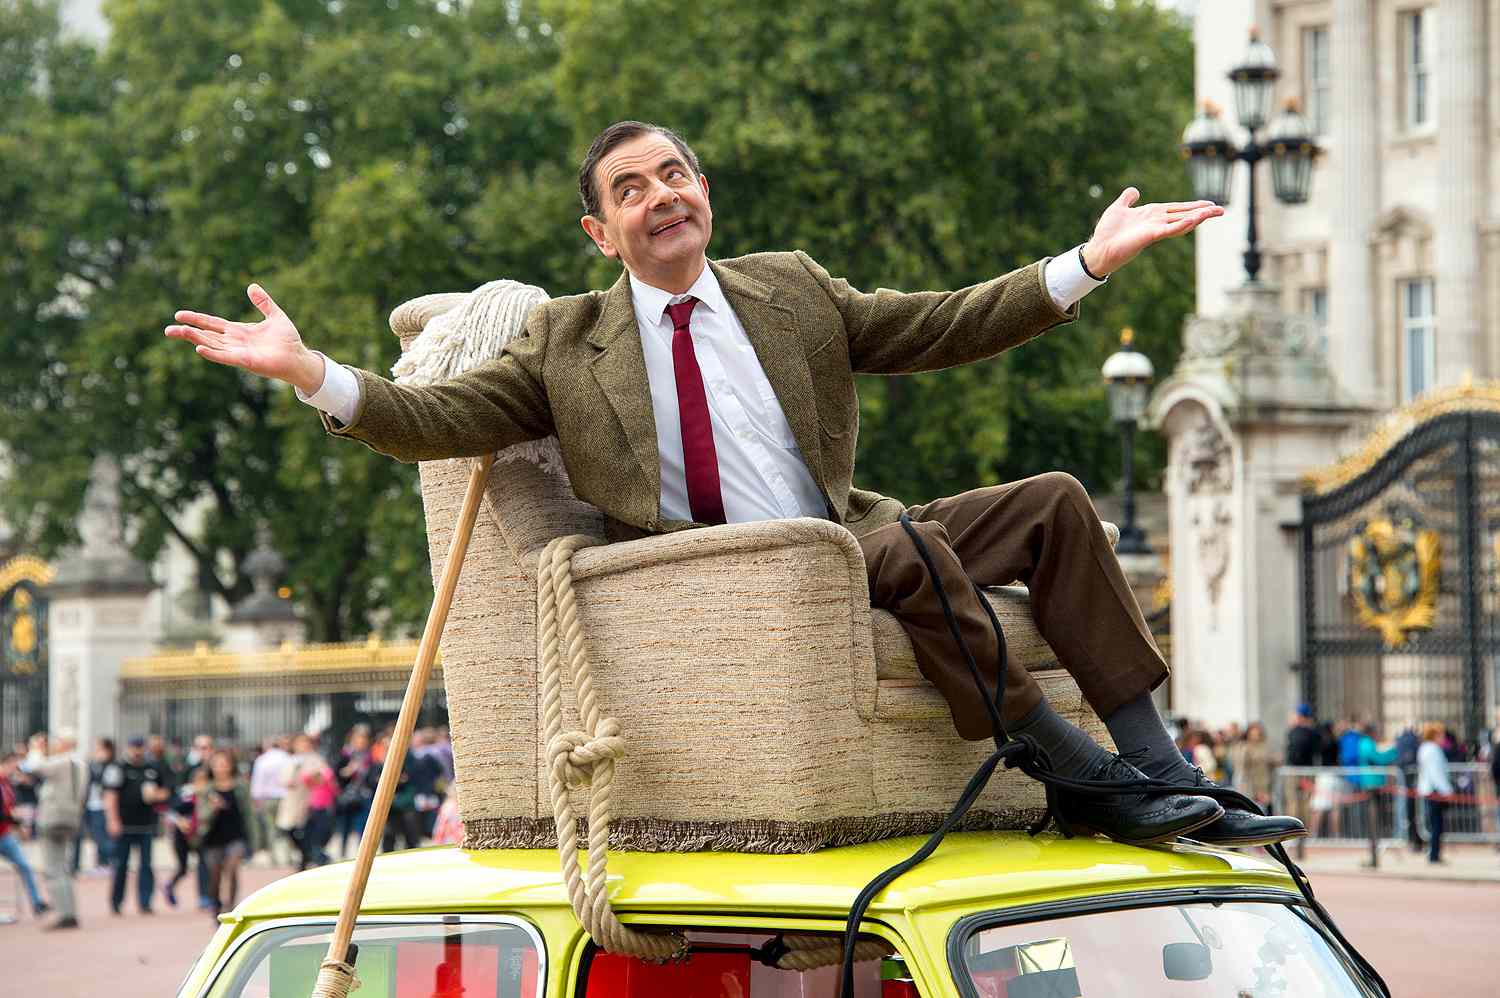 Mr Bean 25th anniversary celebrated outside Buckingham Palace 